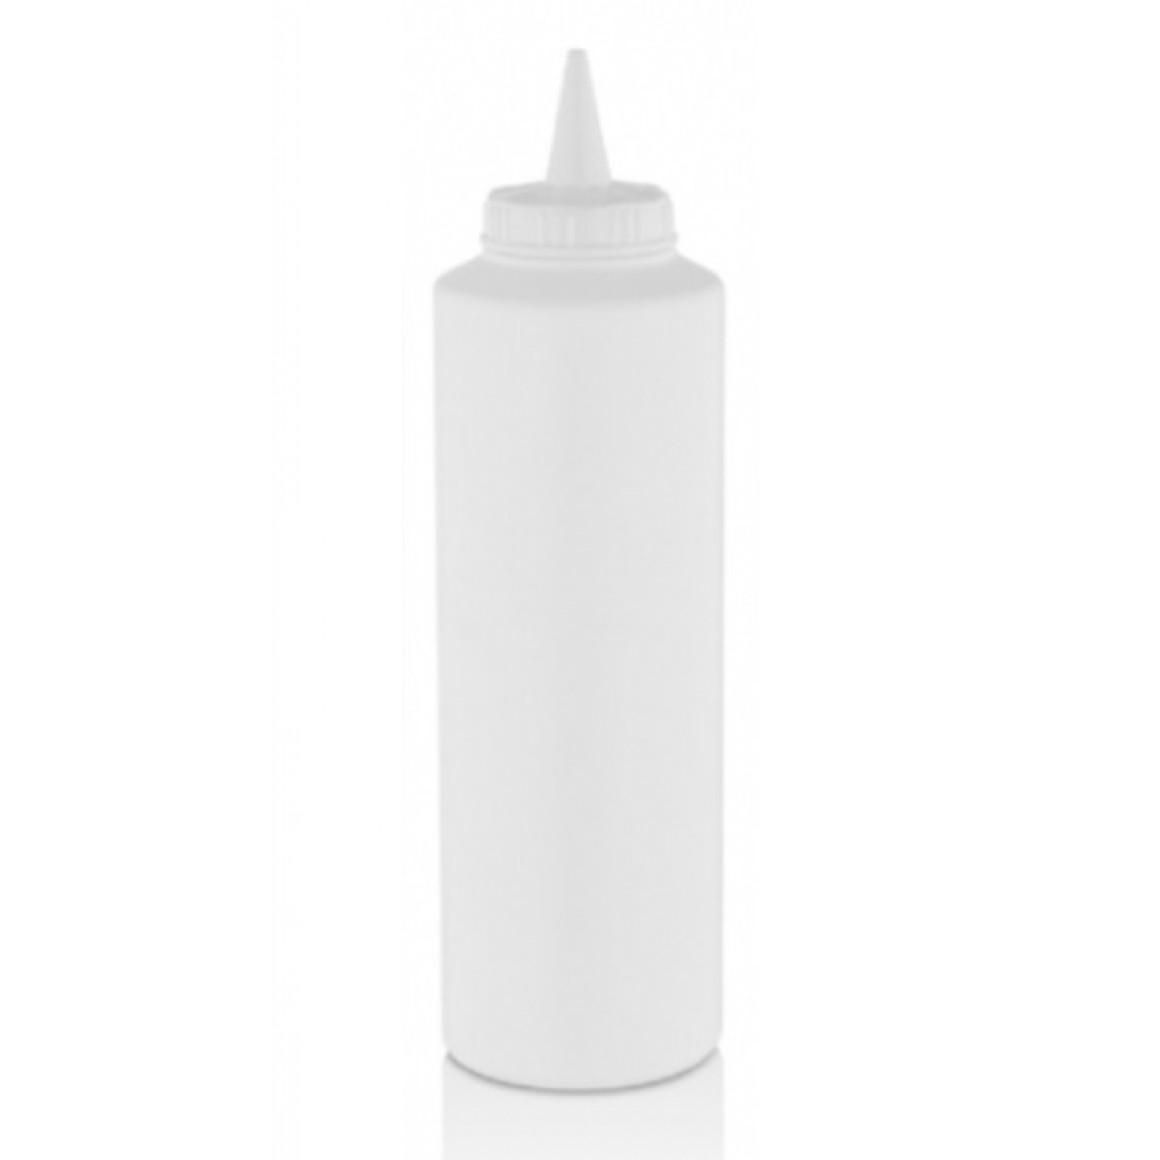 Squeeze bottle dispenser 1000 ml White